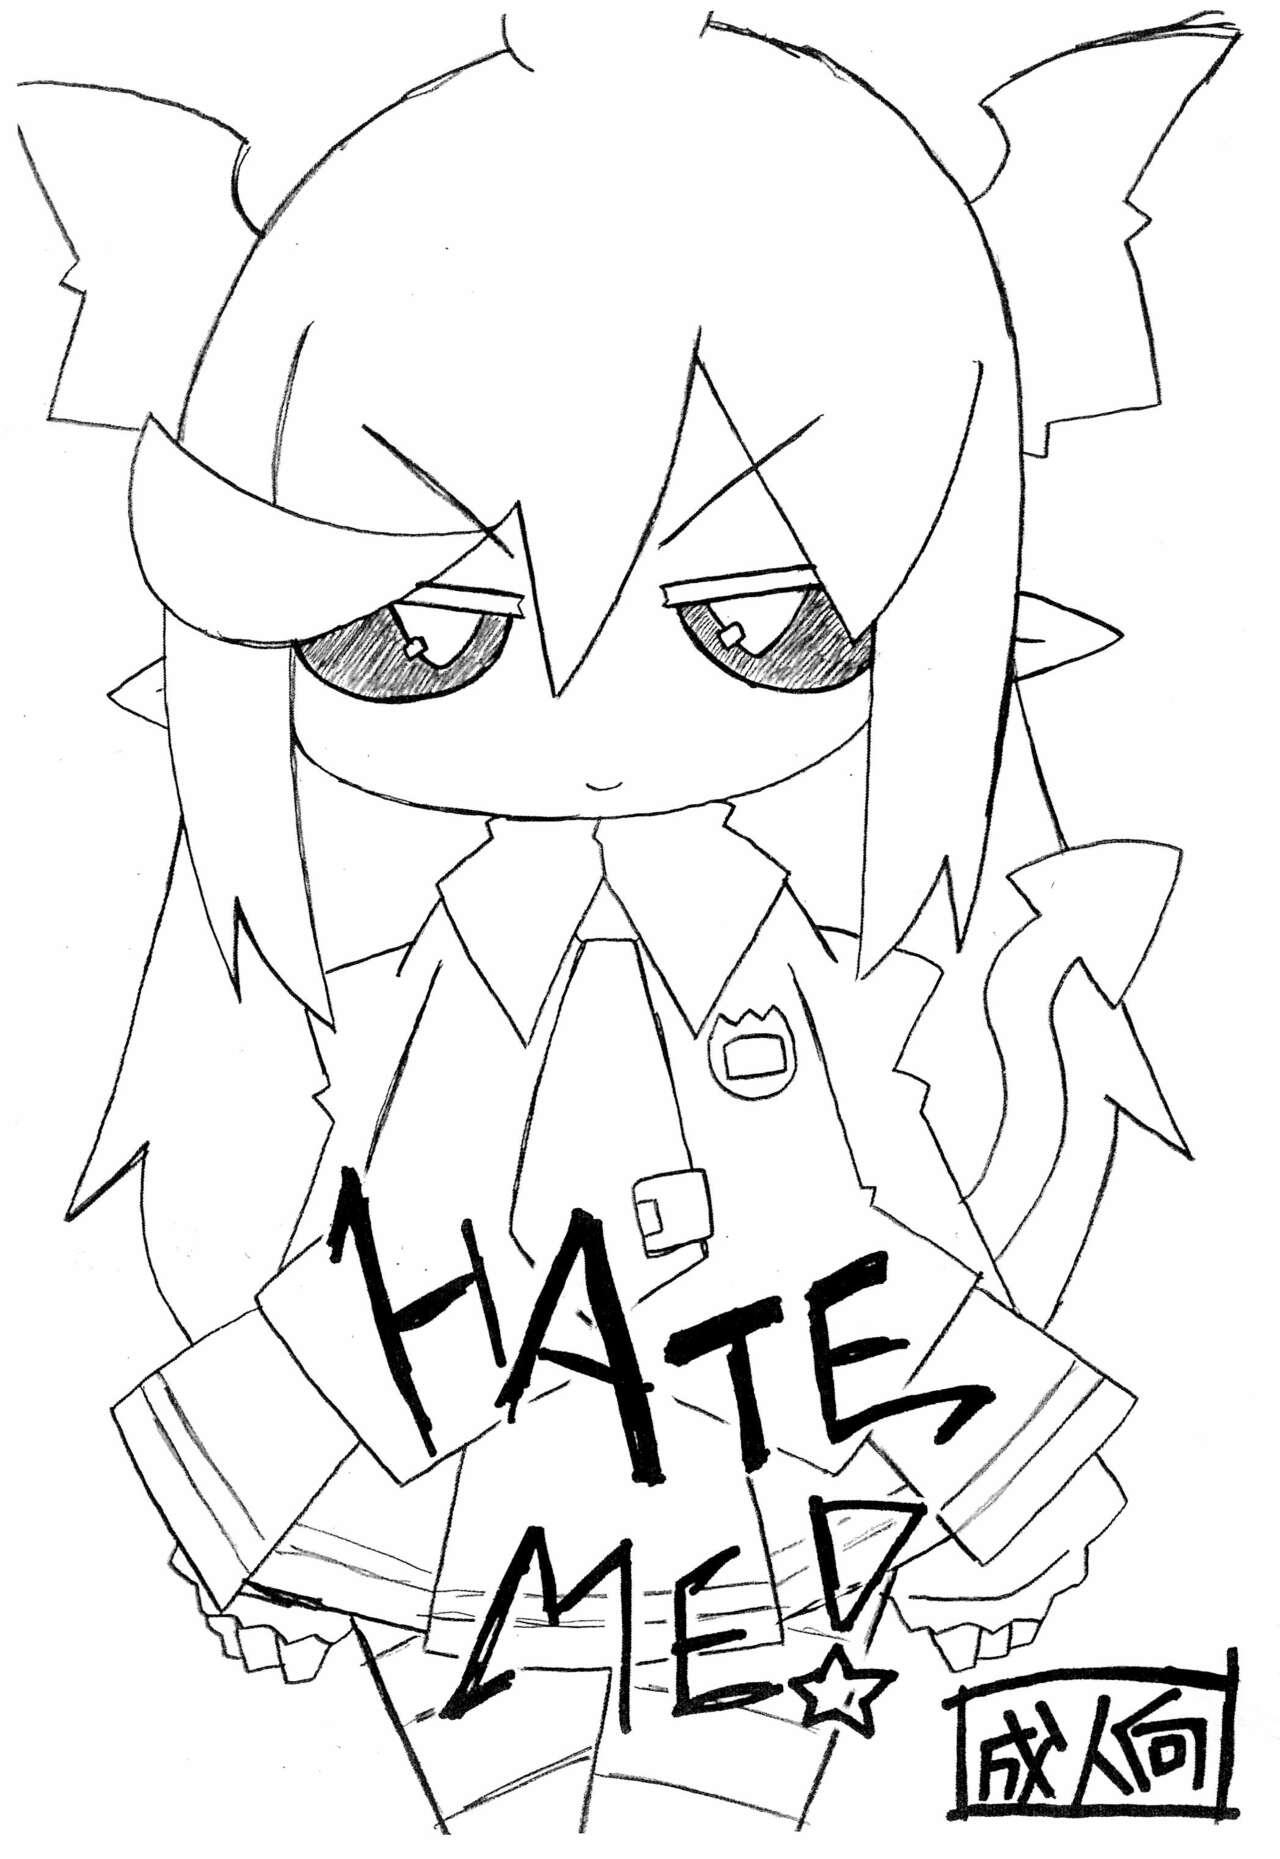 HATE ME! 0